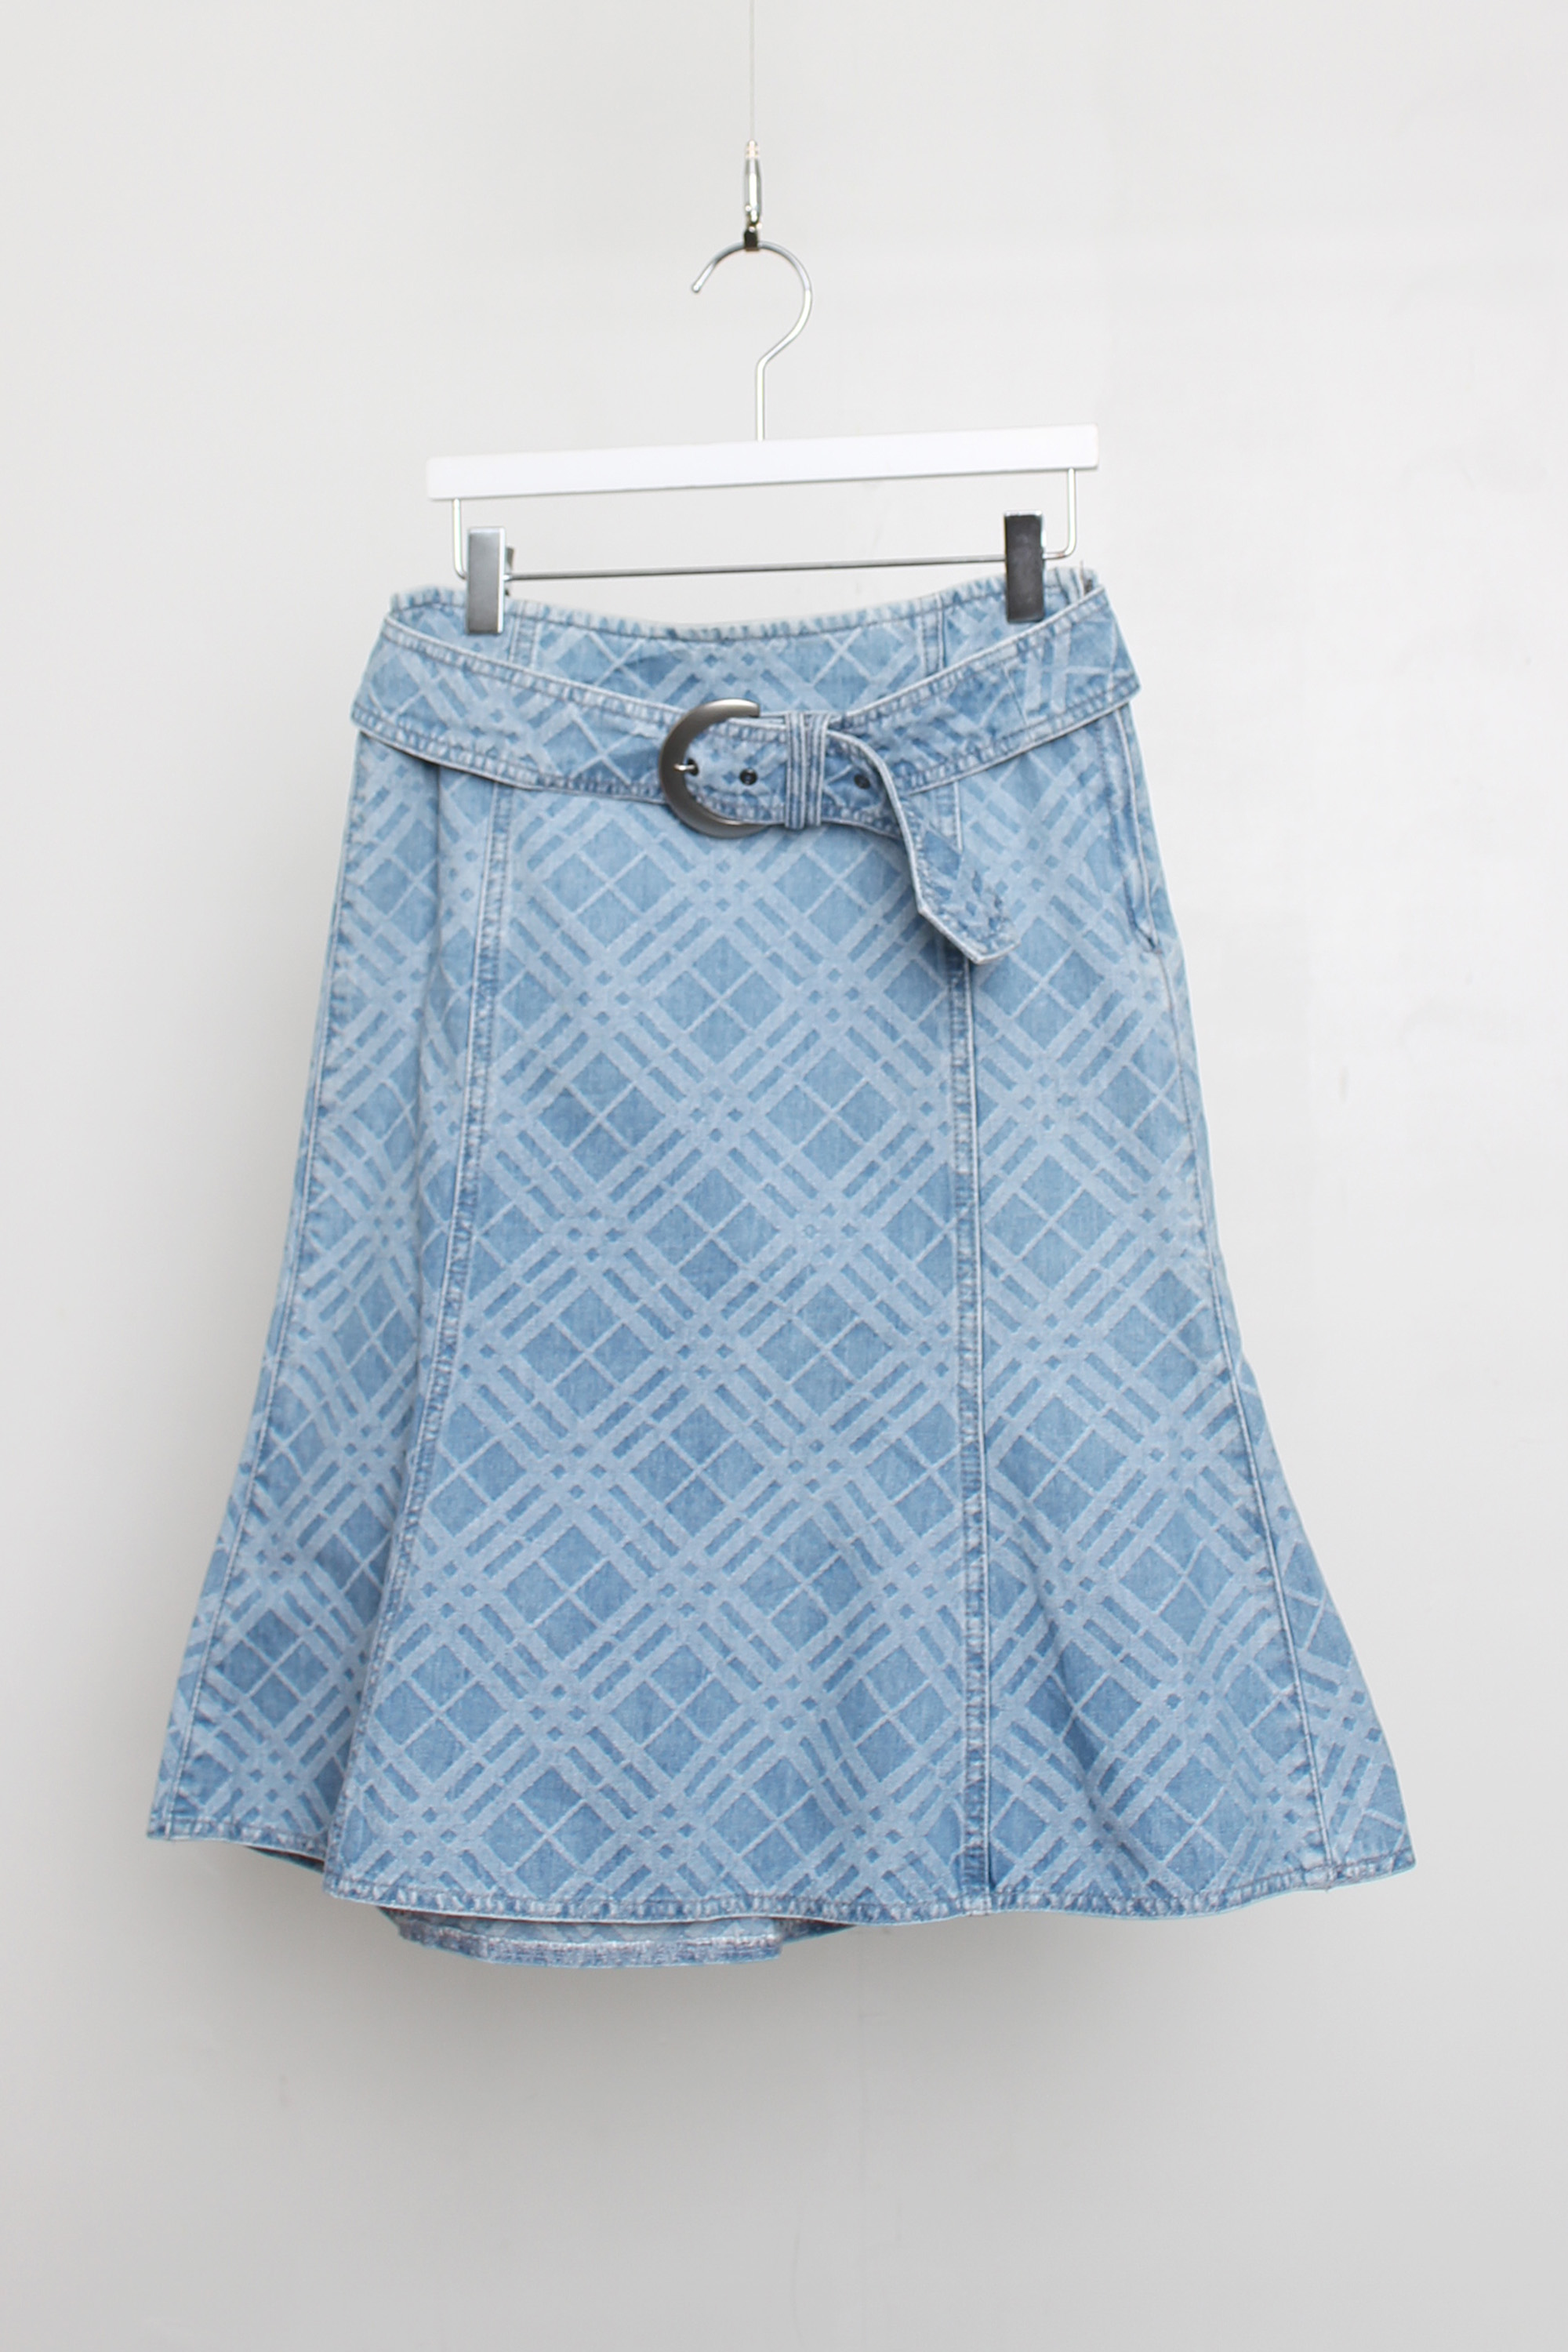 BURBERRY blue label denim skirt